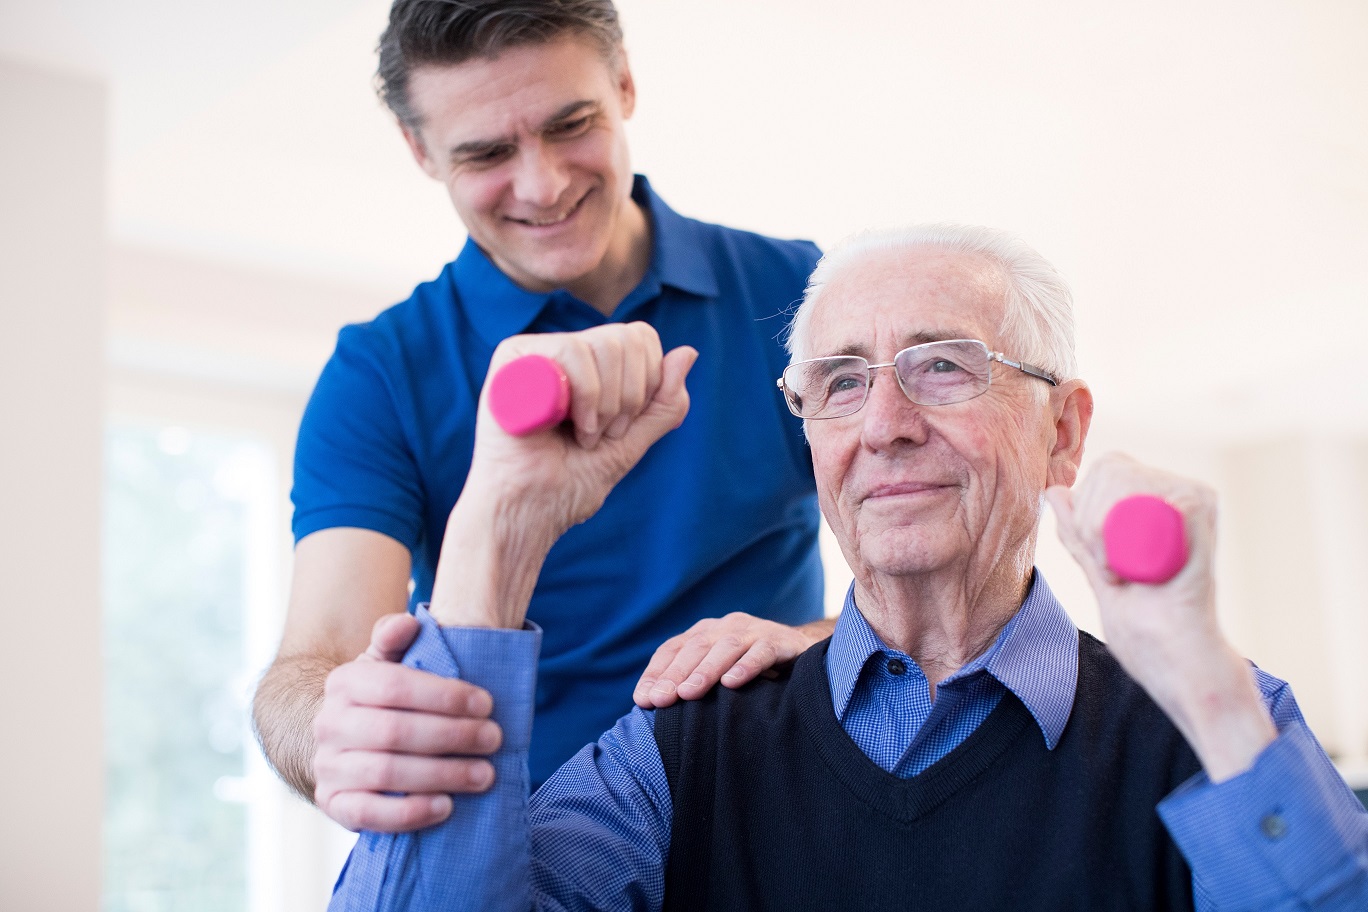 vascular dementia, Physiotherapist Helping Senior Man To Lift Hand Weights